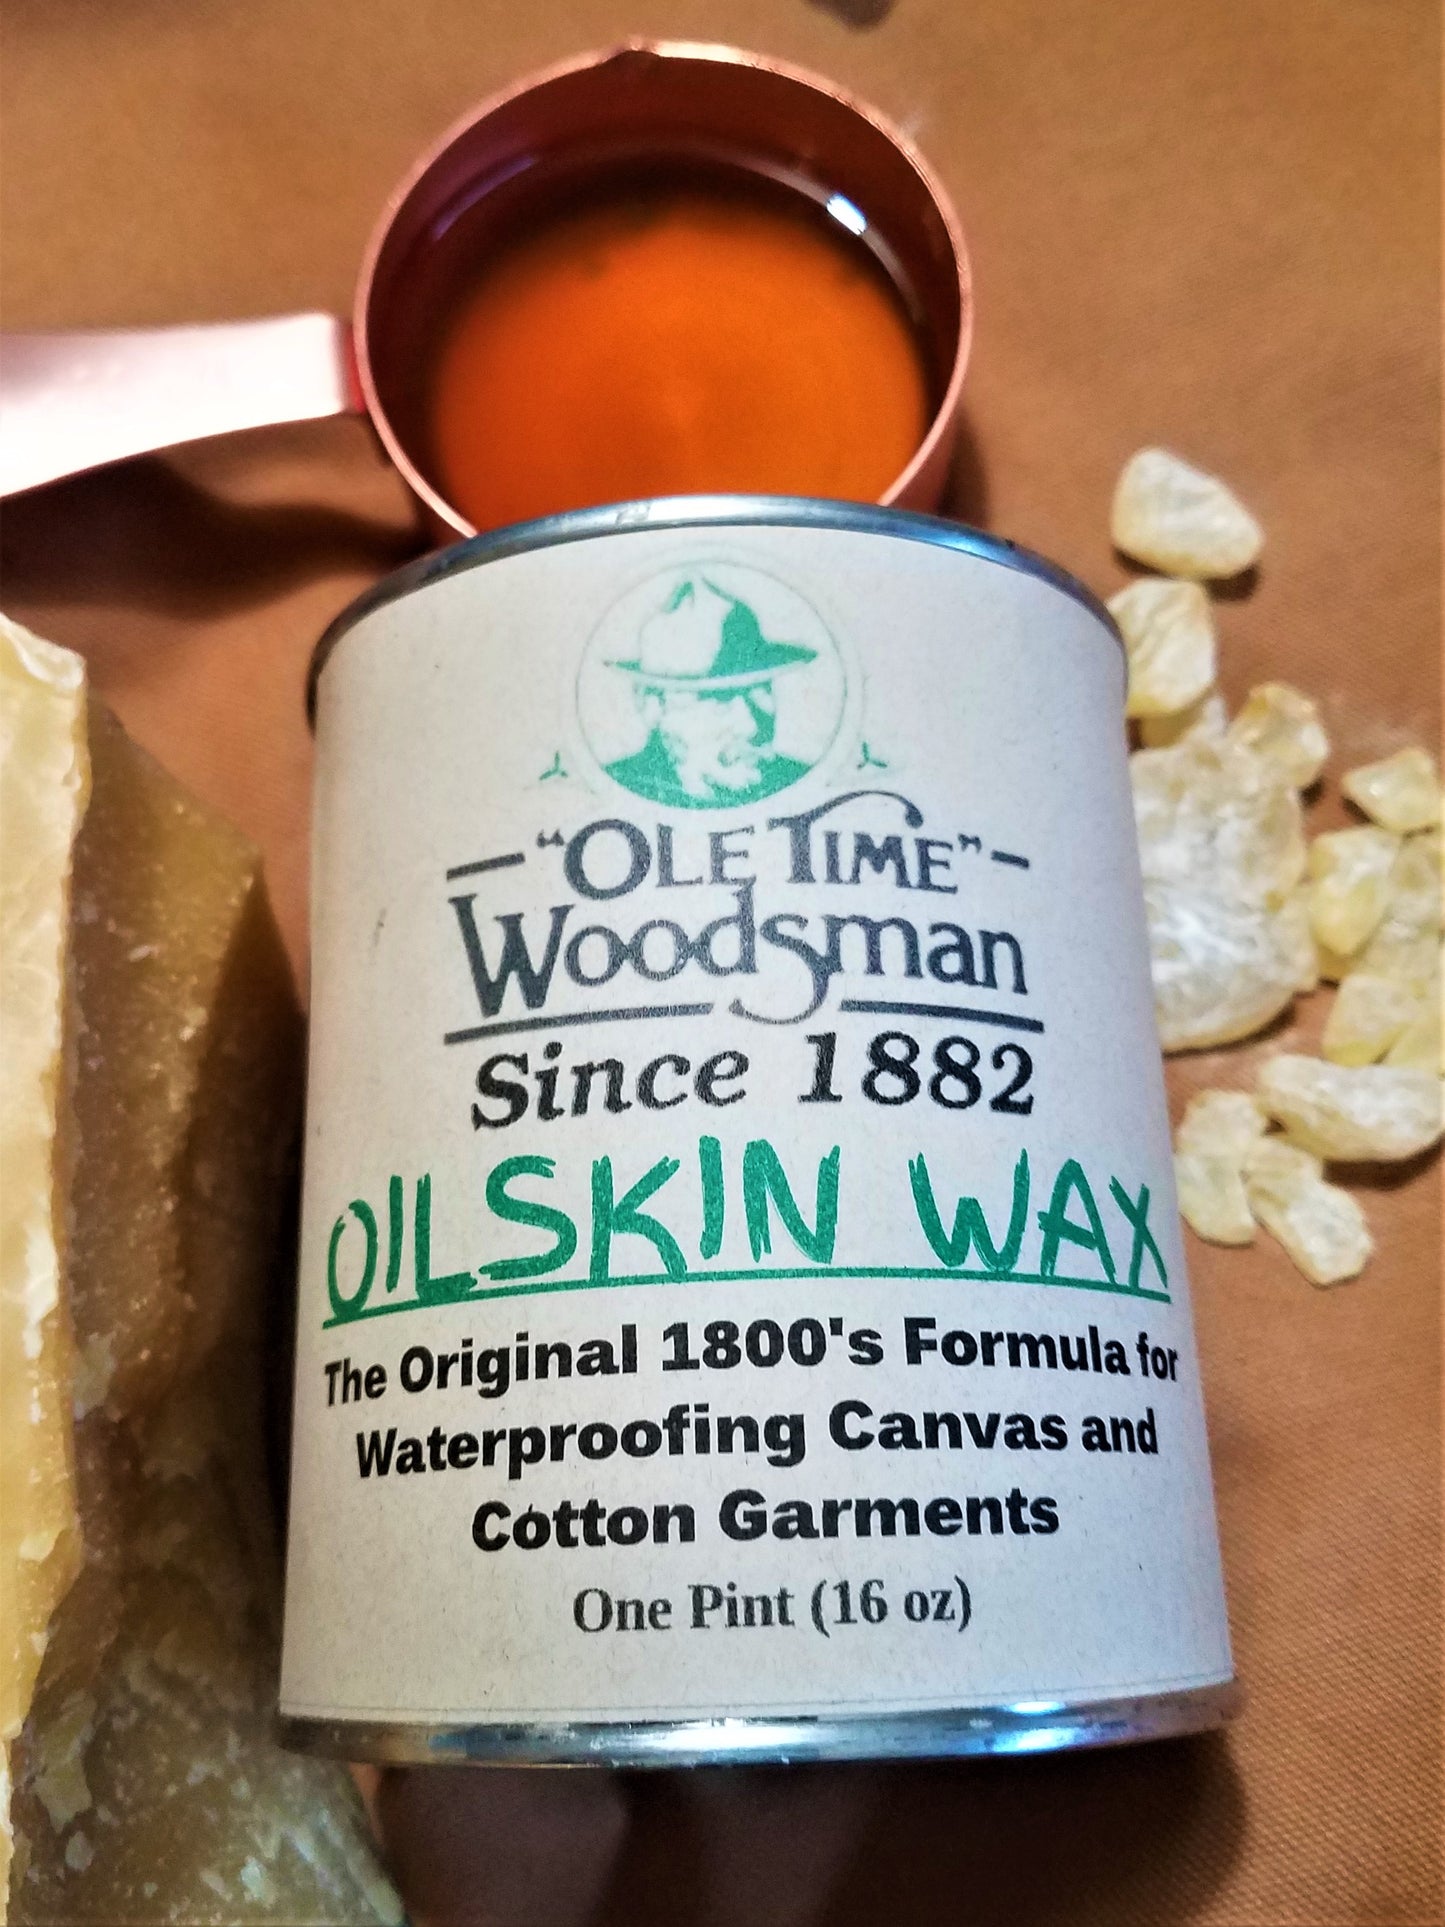 OLE TIME WOODSMAN SINCE 1882 OILSKIN WAX (QUART SIZE 32 FL OZ) - Ole Time Woodsman